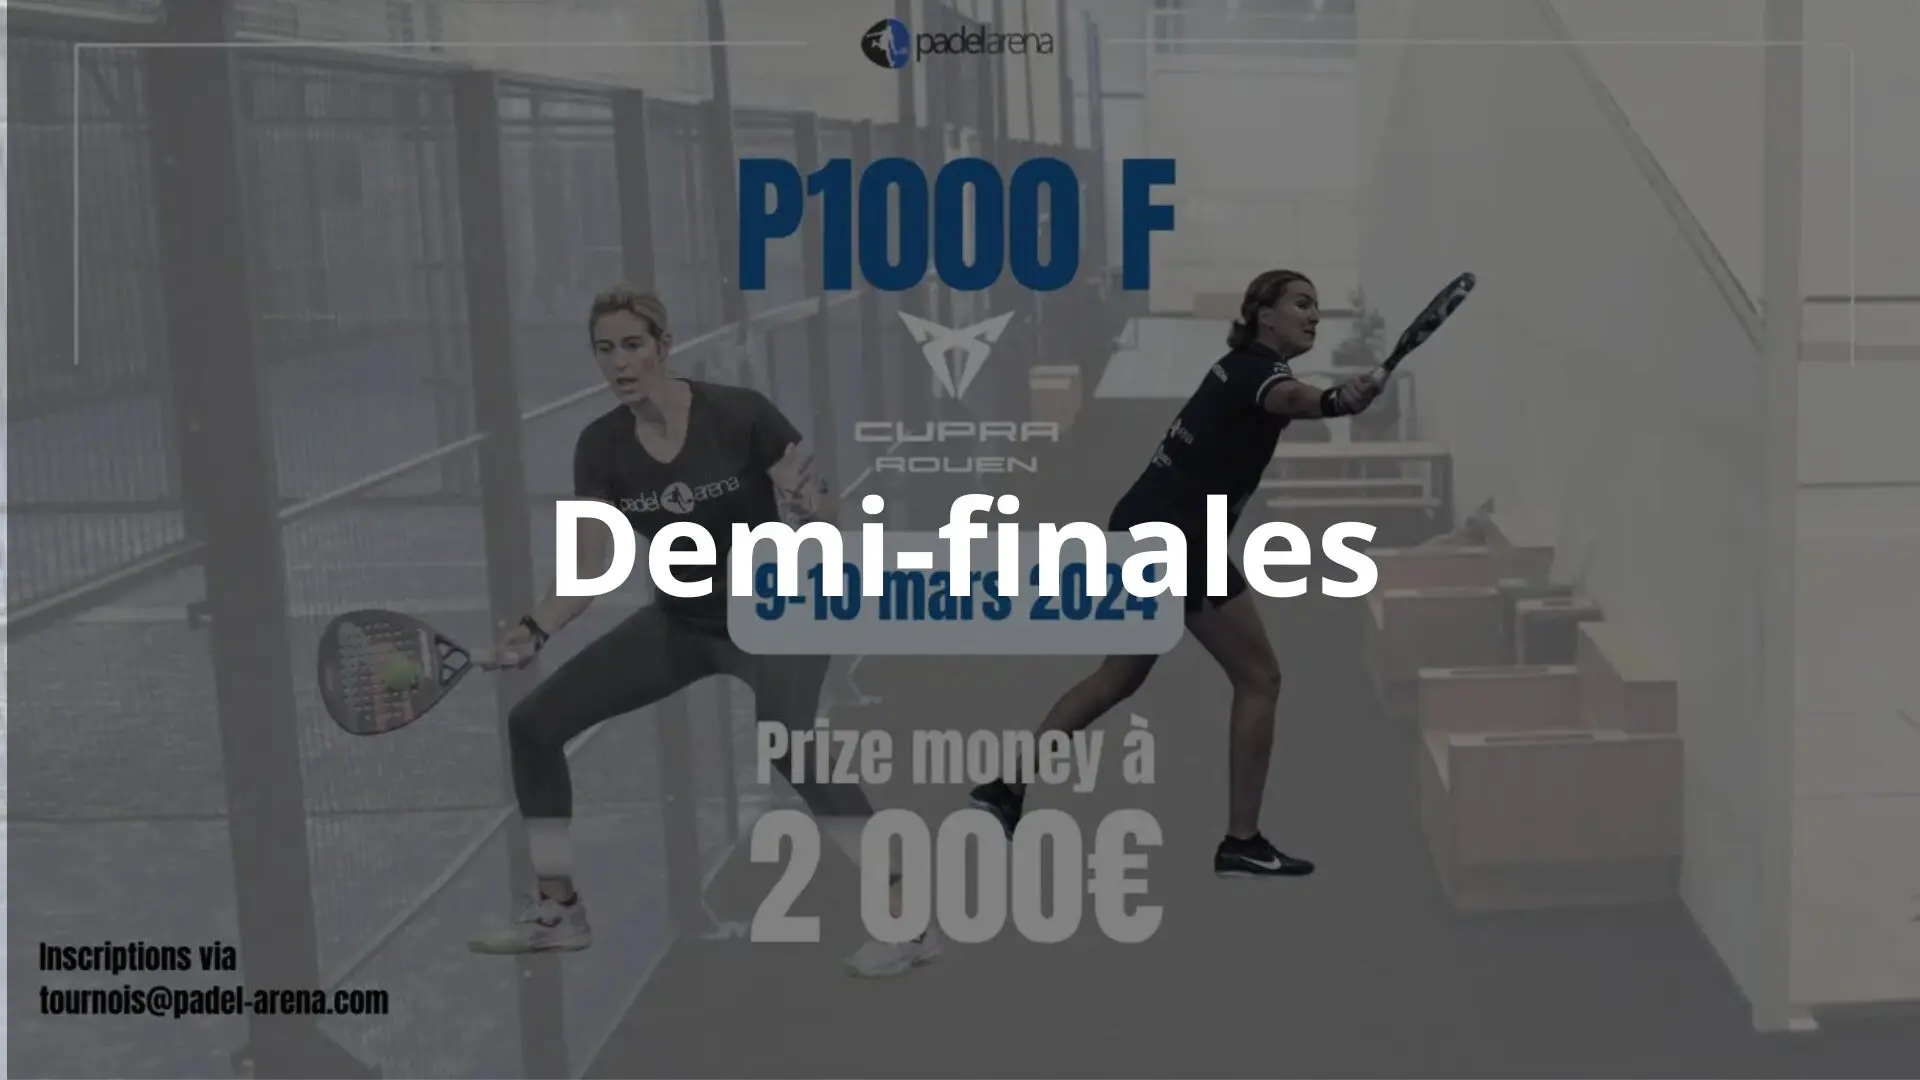 P1000 Padel Arena Cupra Rouen – Inici de les semifinals en directe!